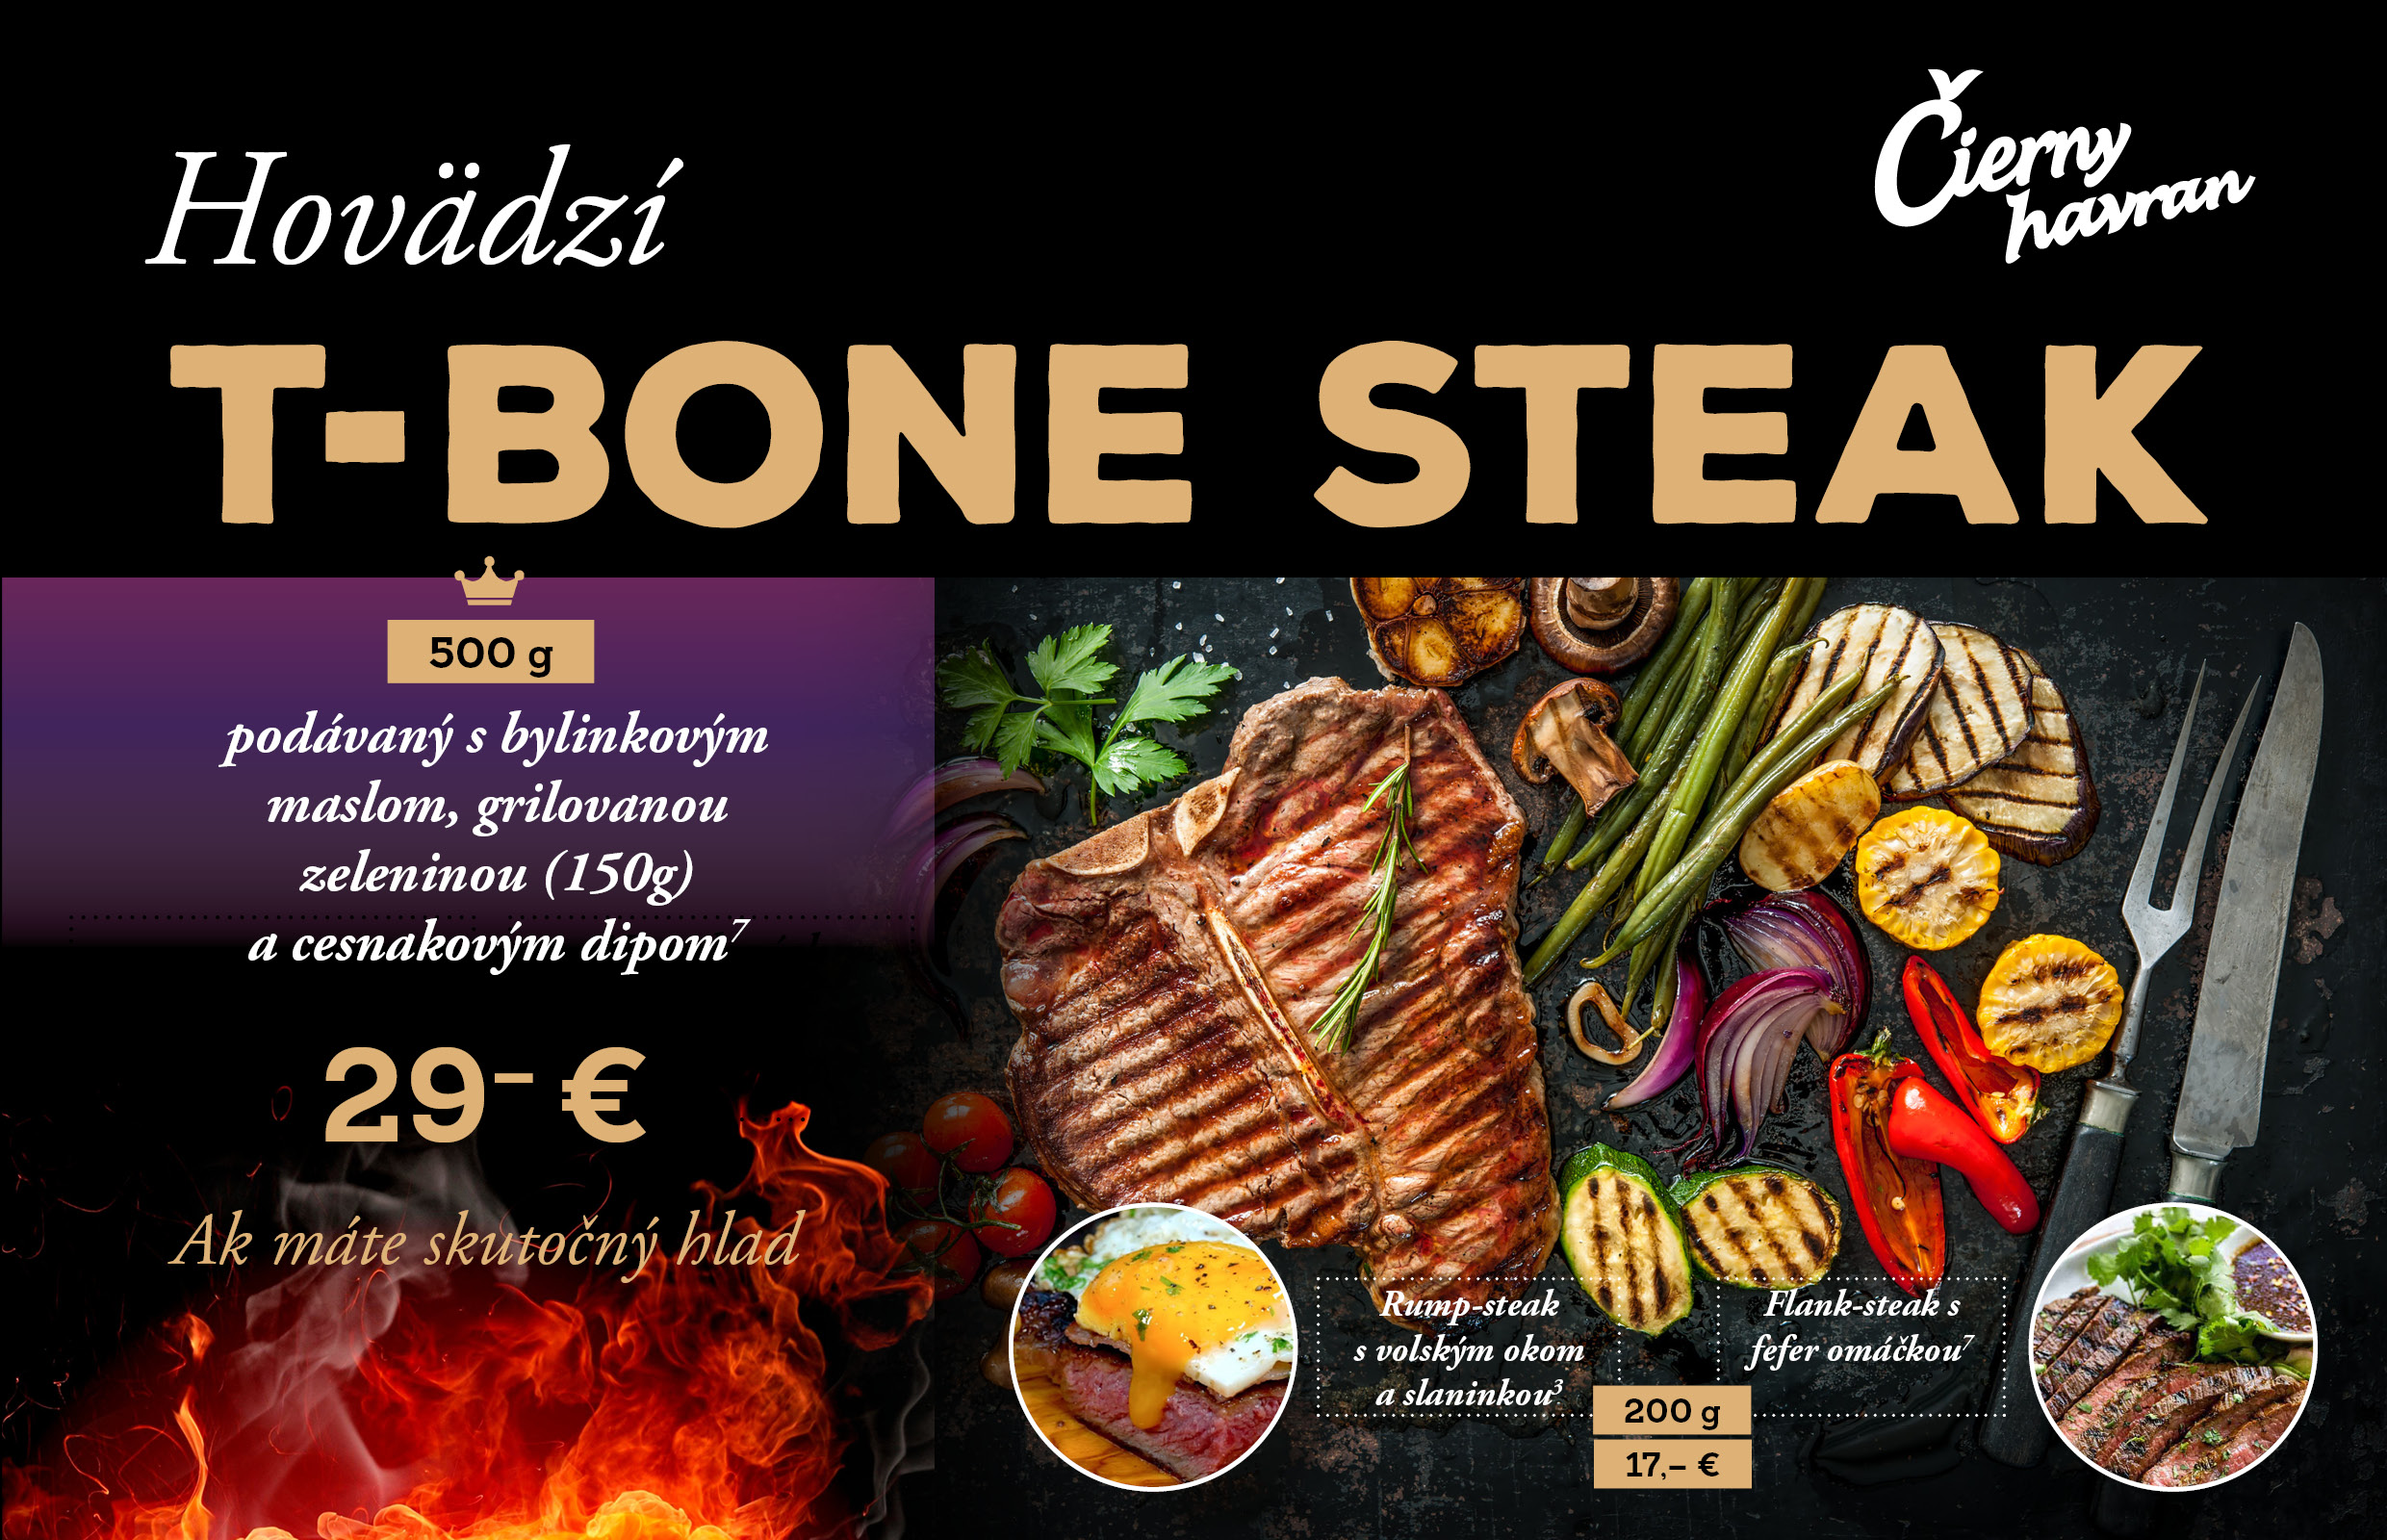 T-bone 500g steak